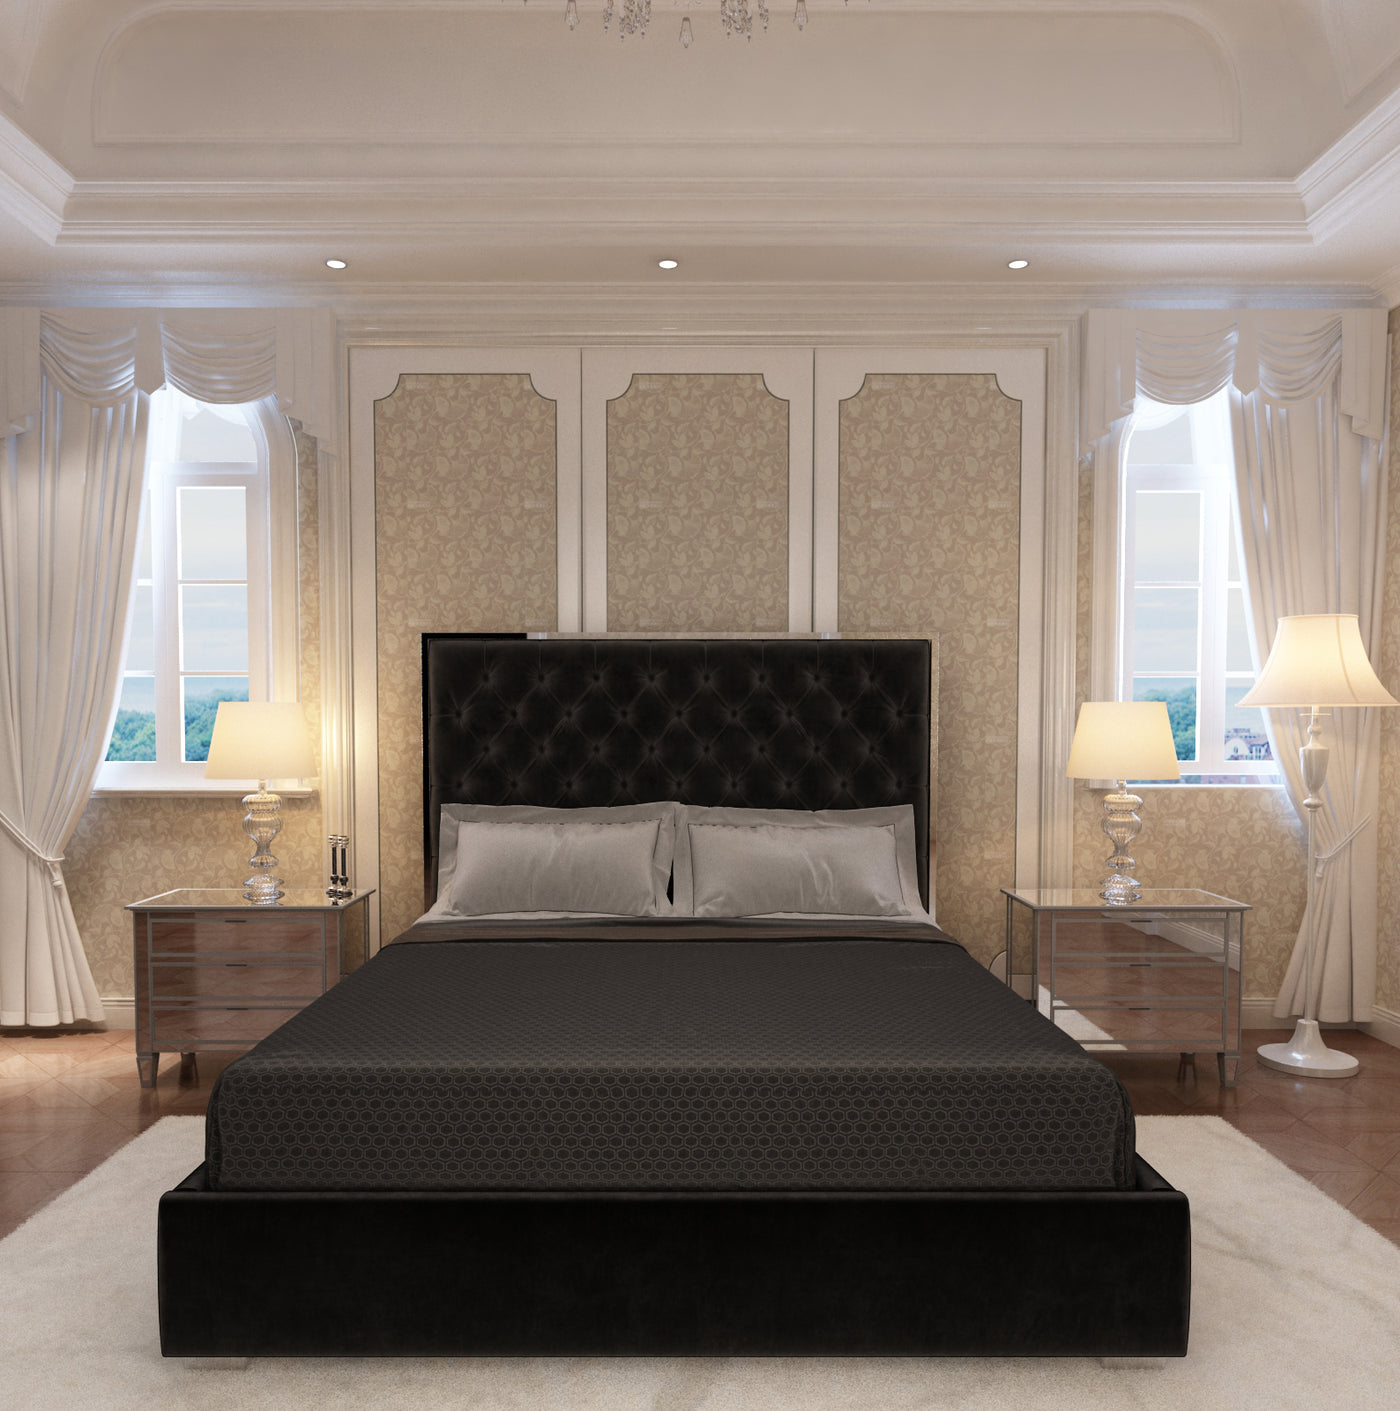 Queen Bed frame- Furniture valley Beds 505764  Beds & Bed Frames (505764) King Bed